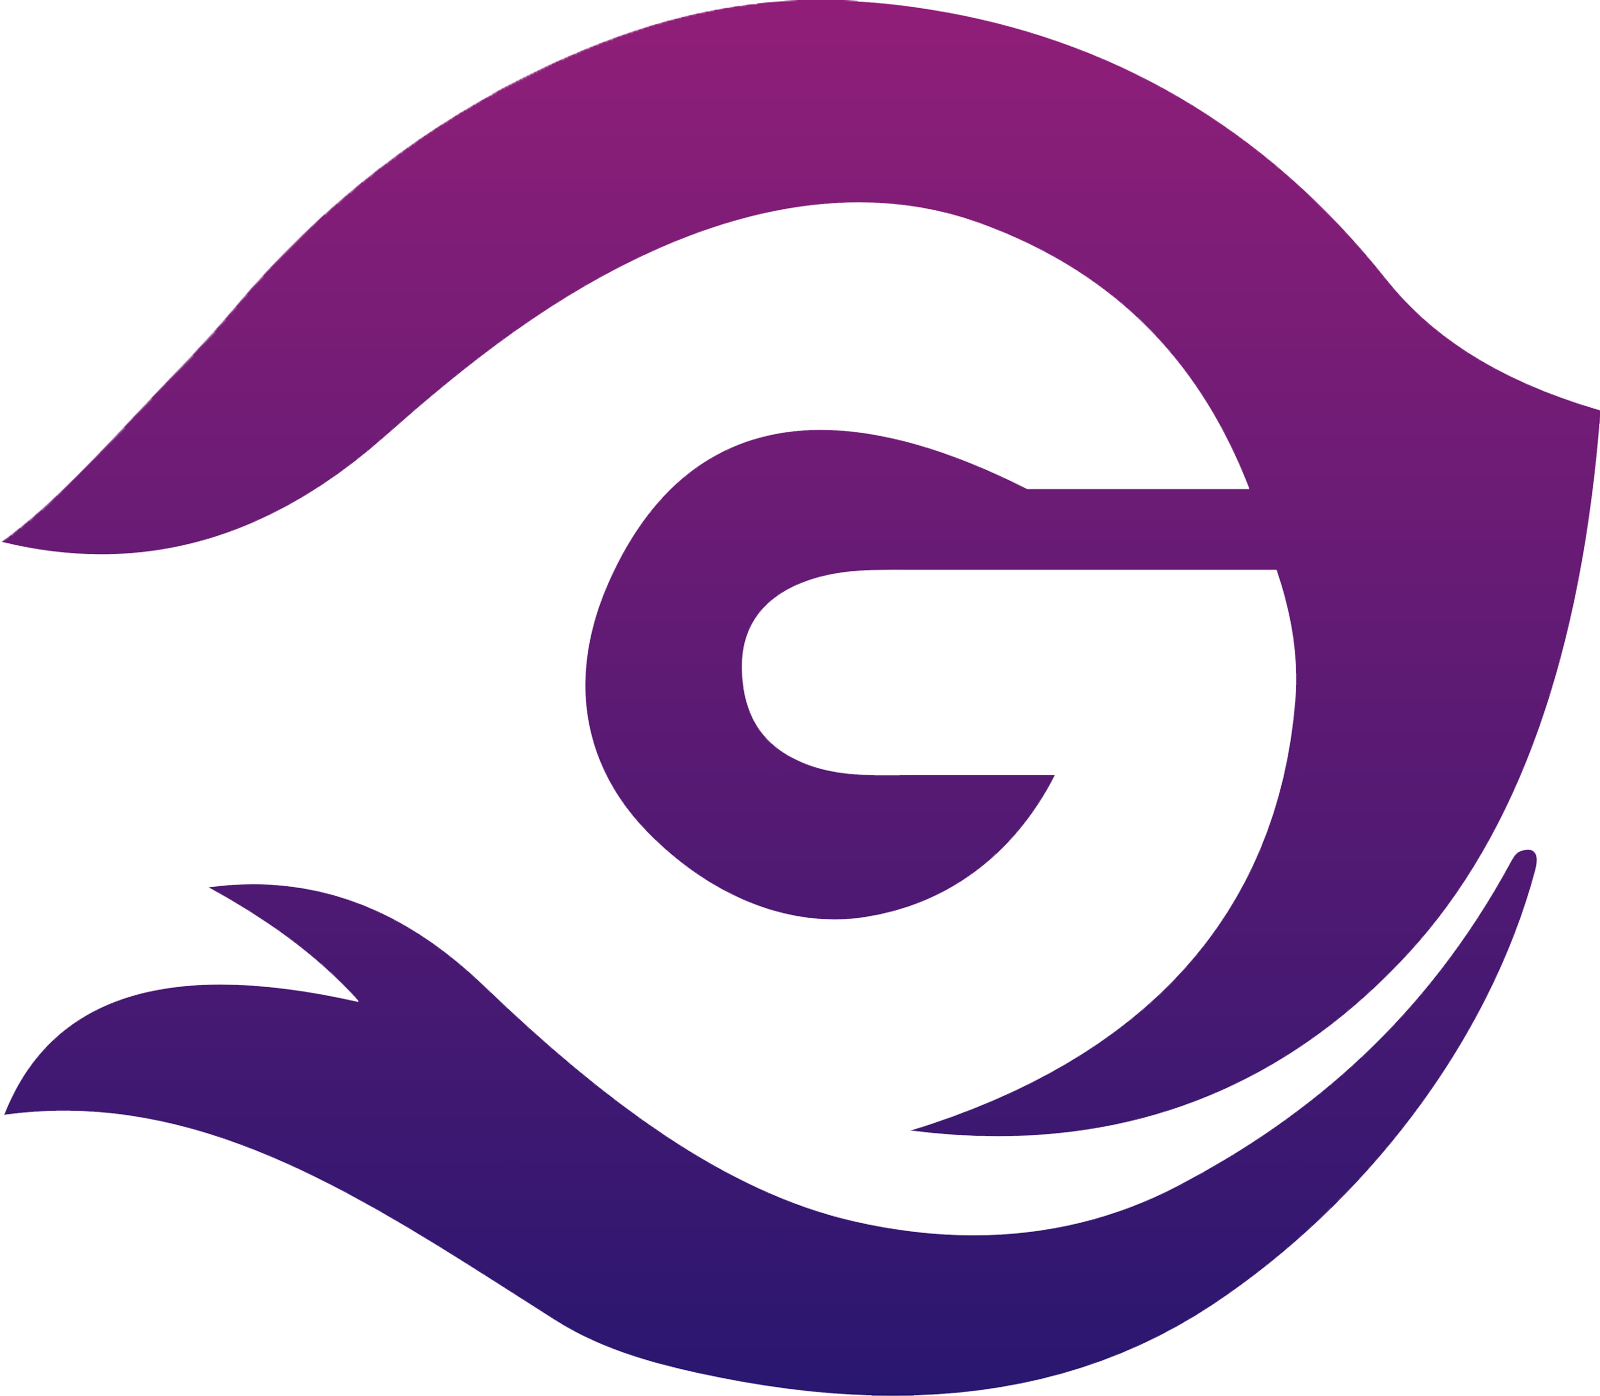 glance-logo